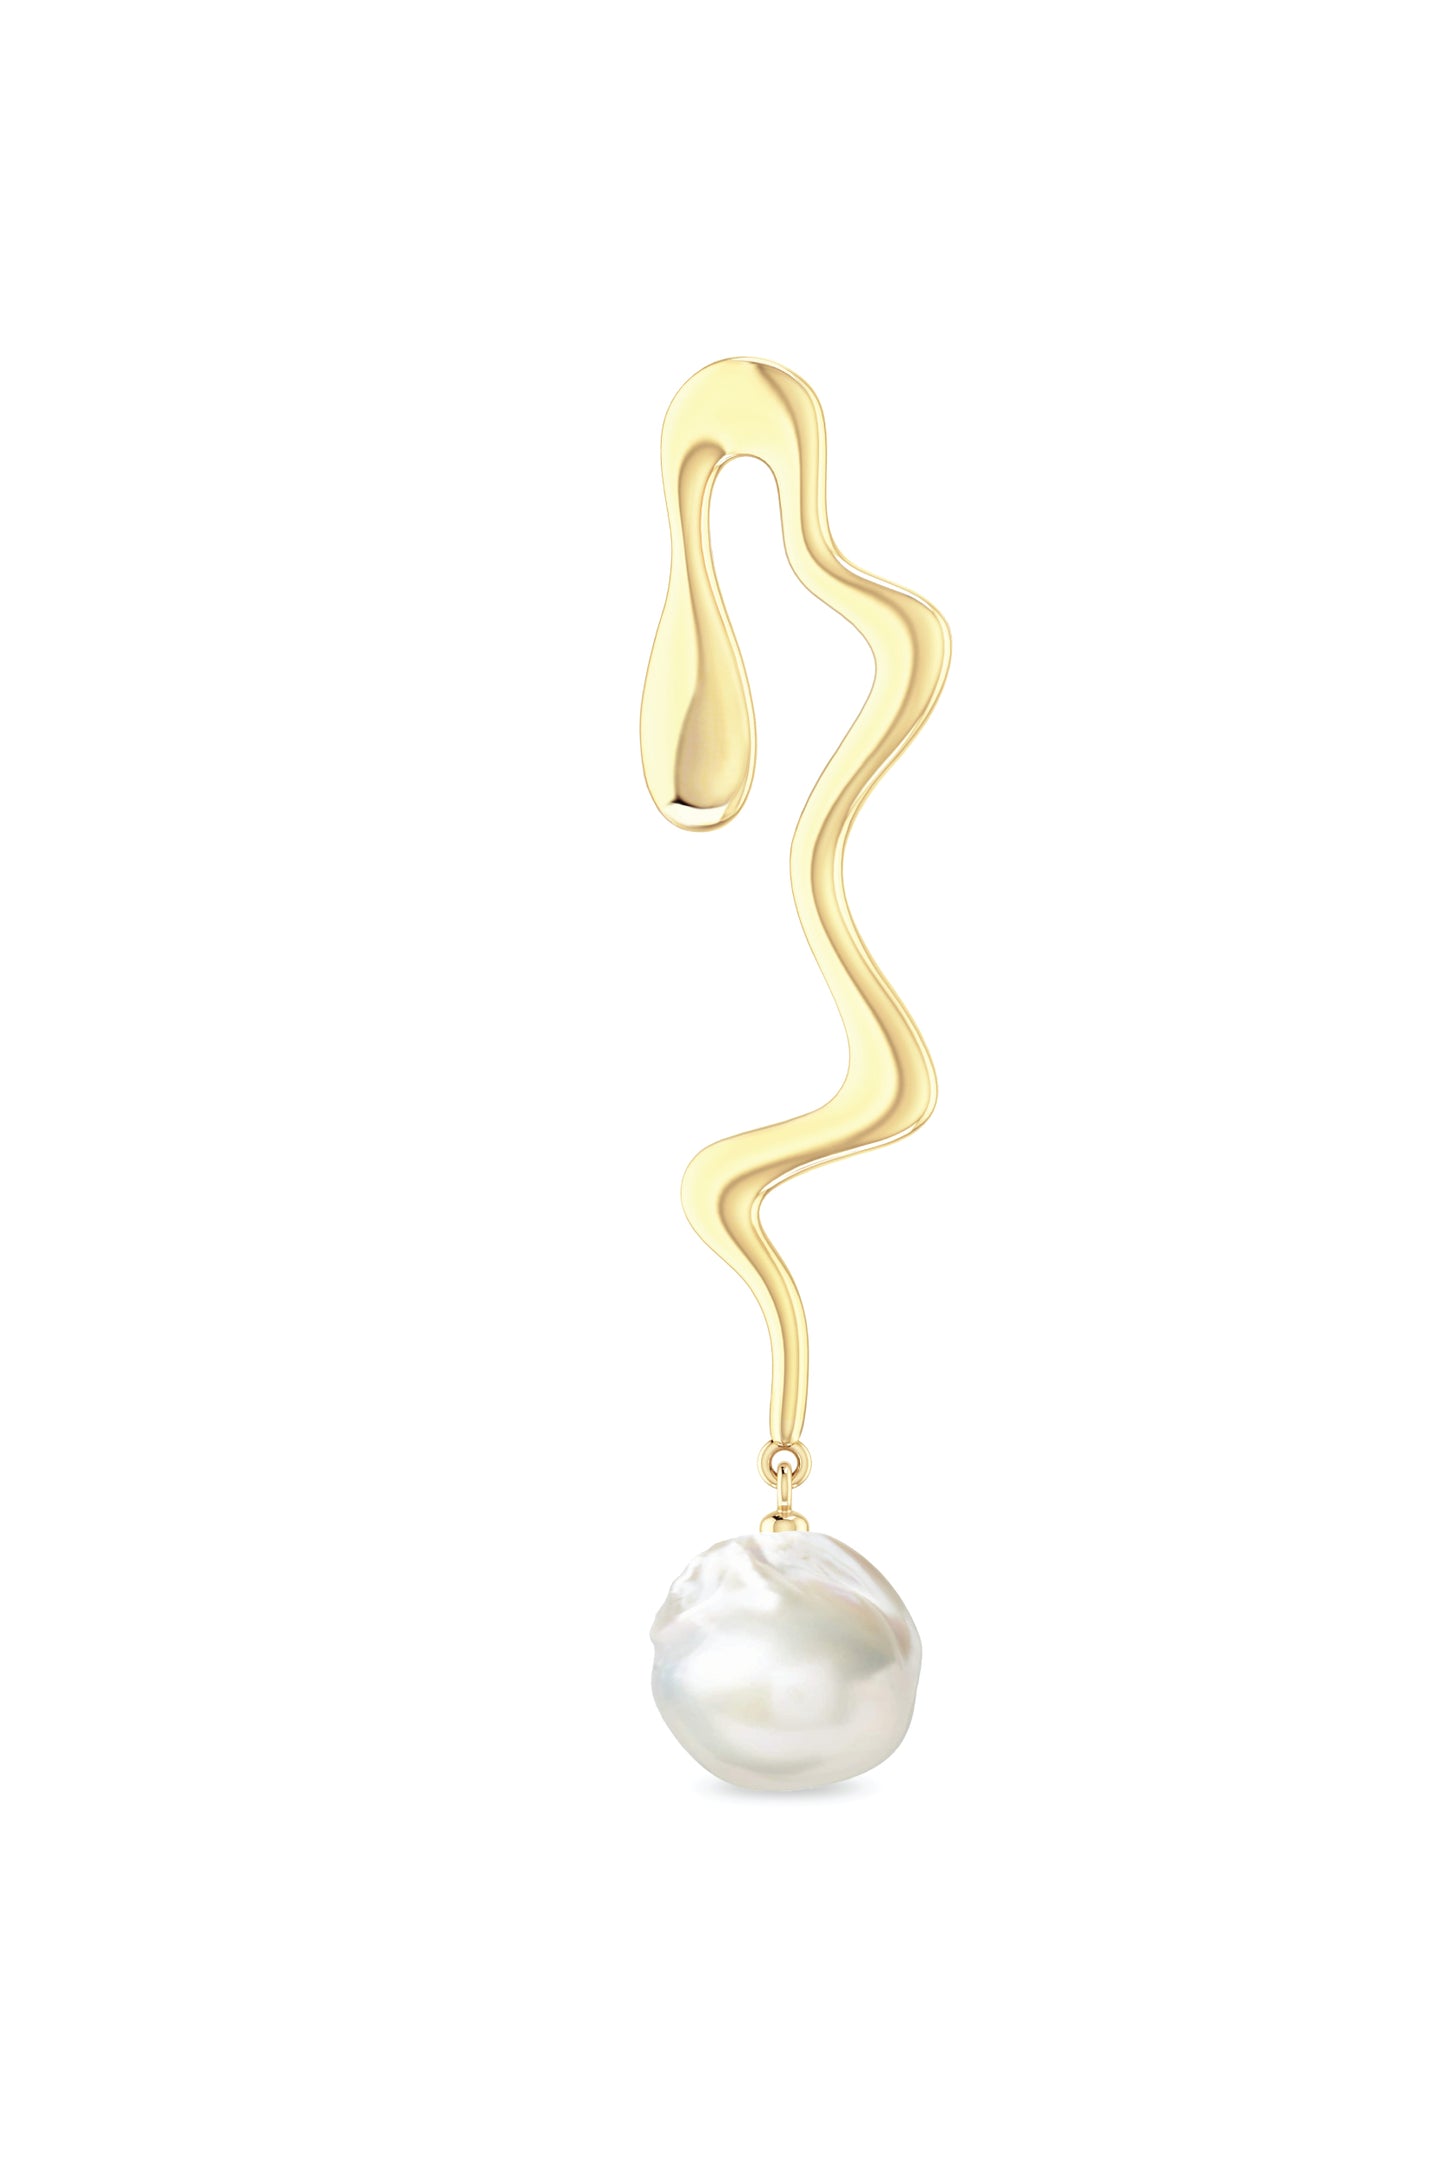 Liquid Pearl Earring right- Gold